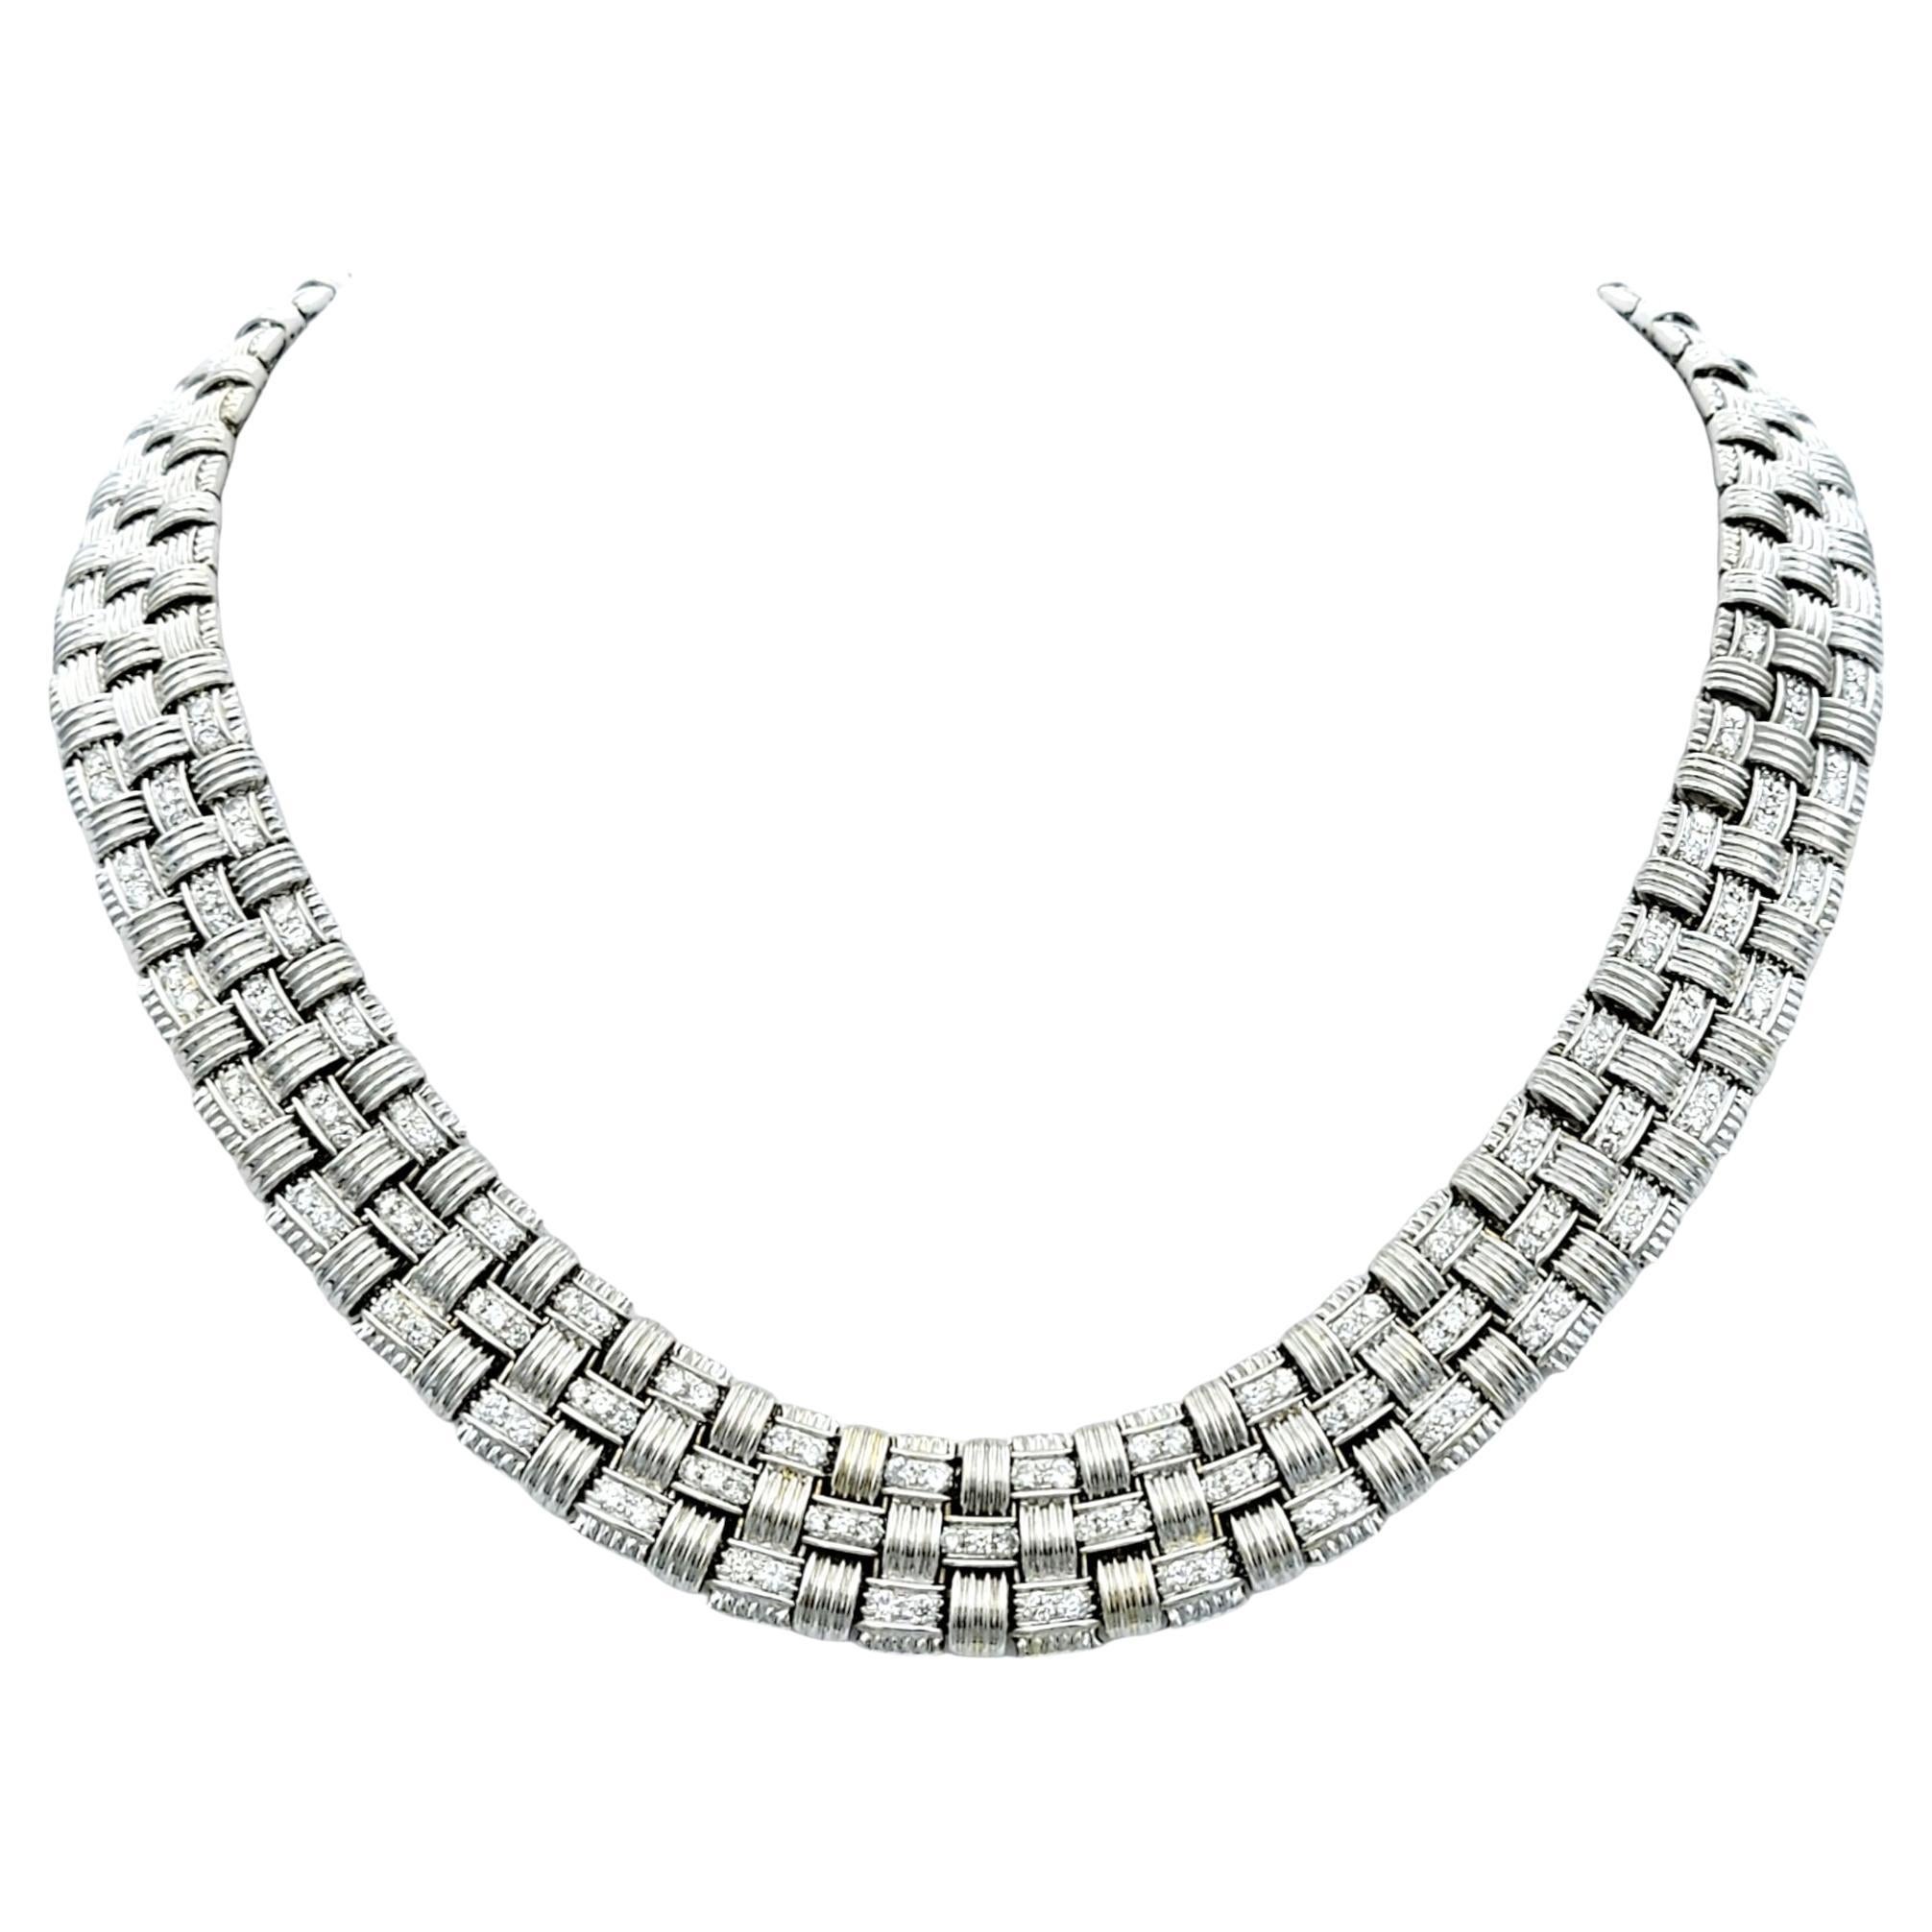 Roberto Coin Appassionata Diamond Collar Necklace Set in 18 Karat White Gold 